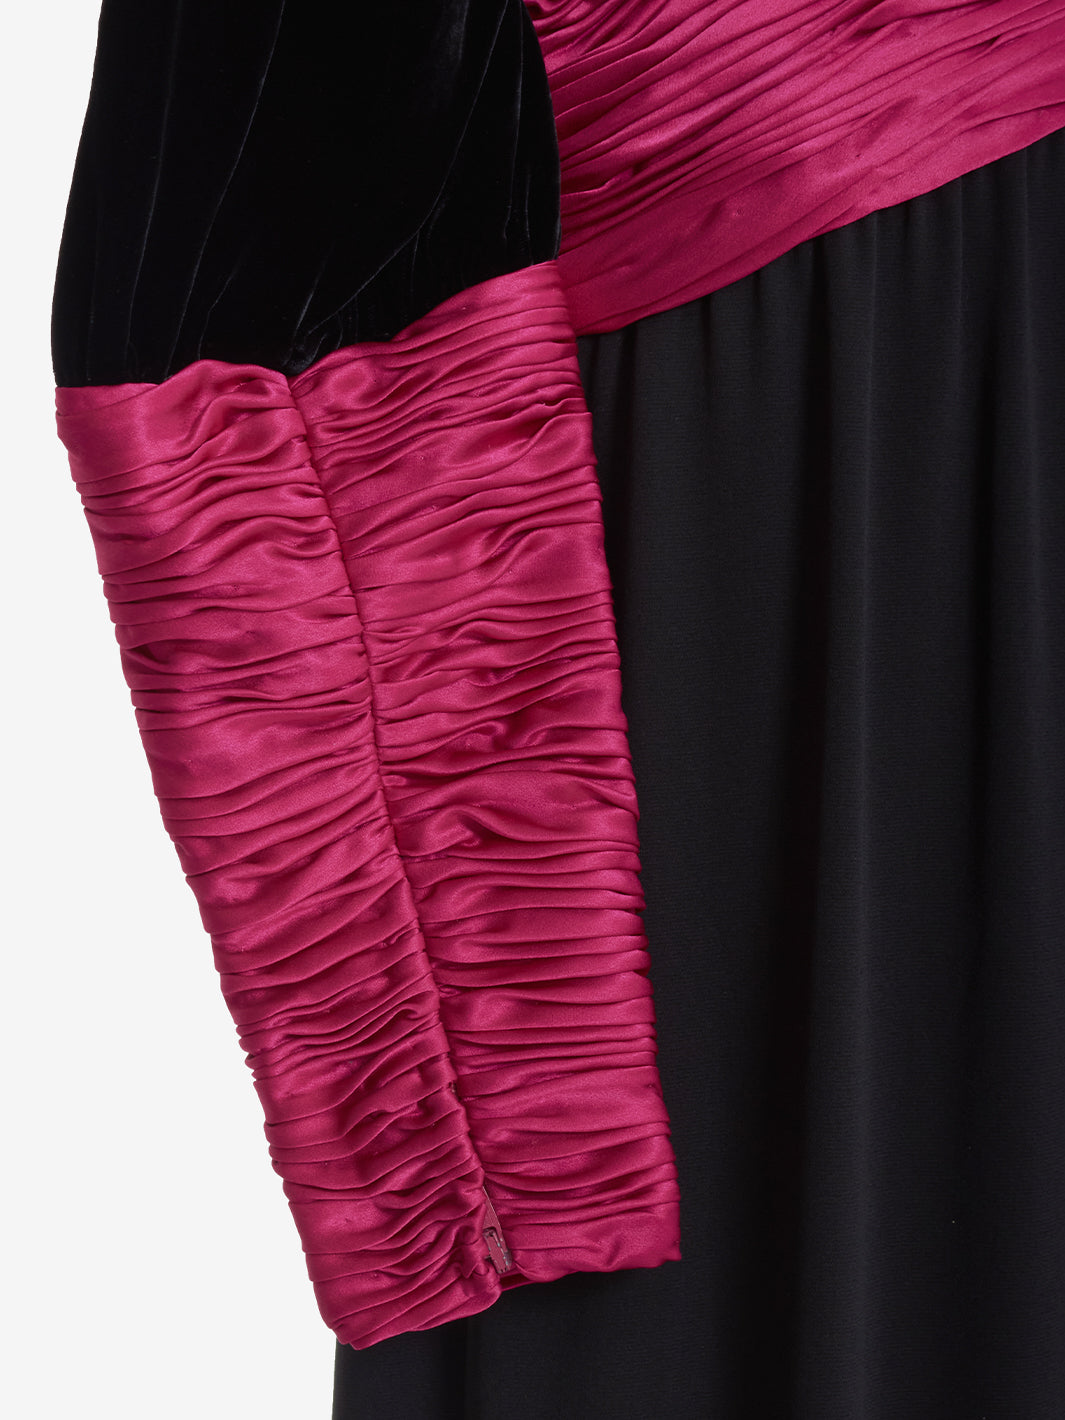 Valentino fuchsia pink draped dress - '80s